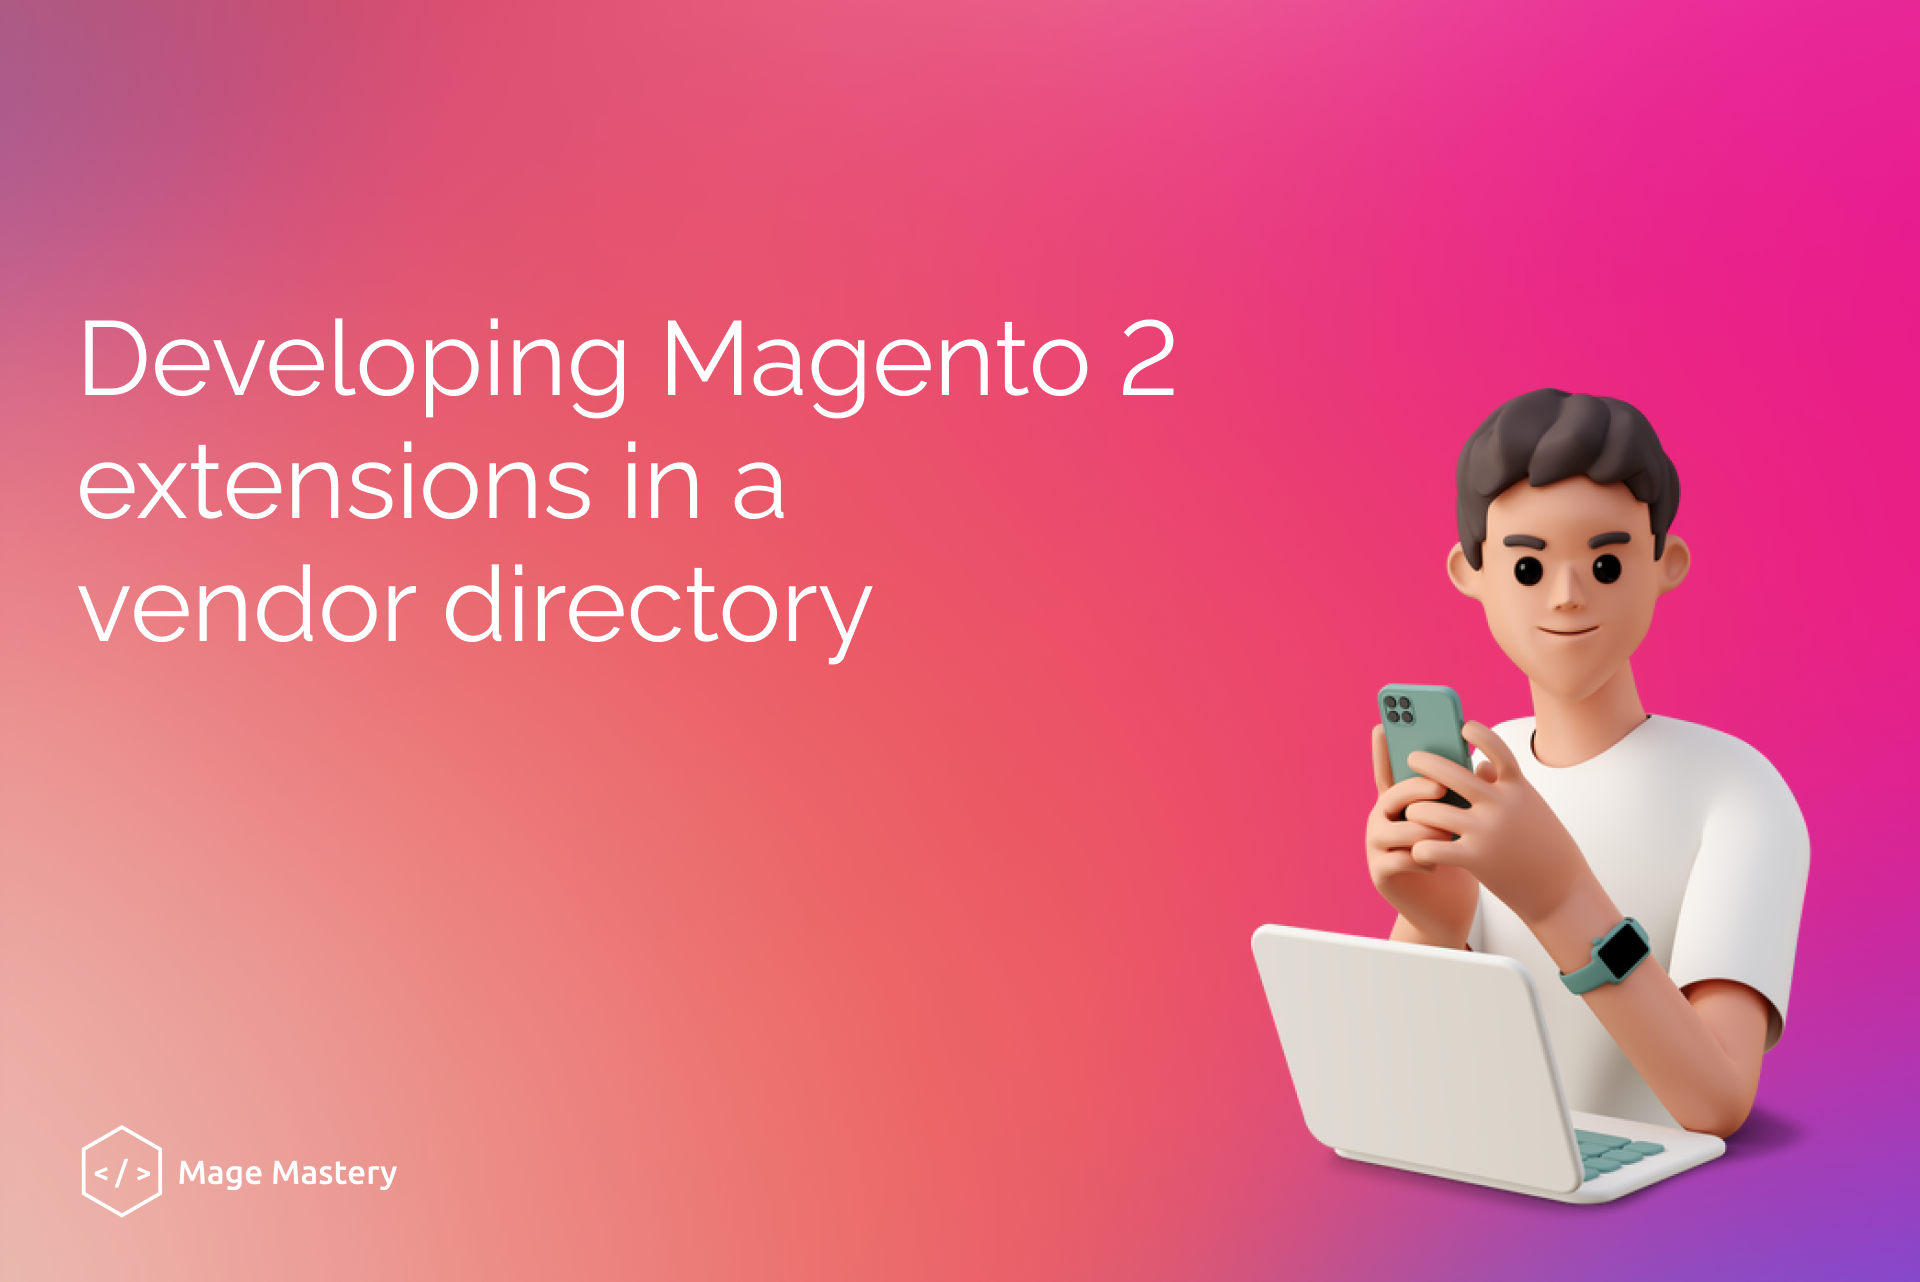 Magento 2 Extension: develop in a vendor directory